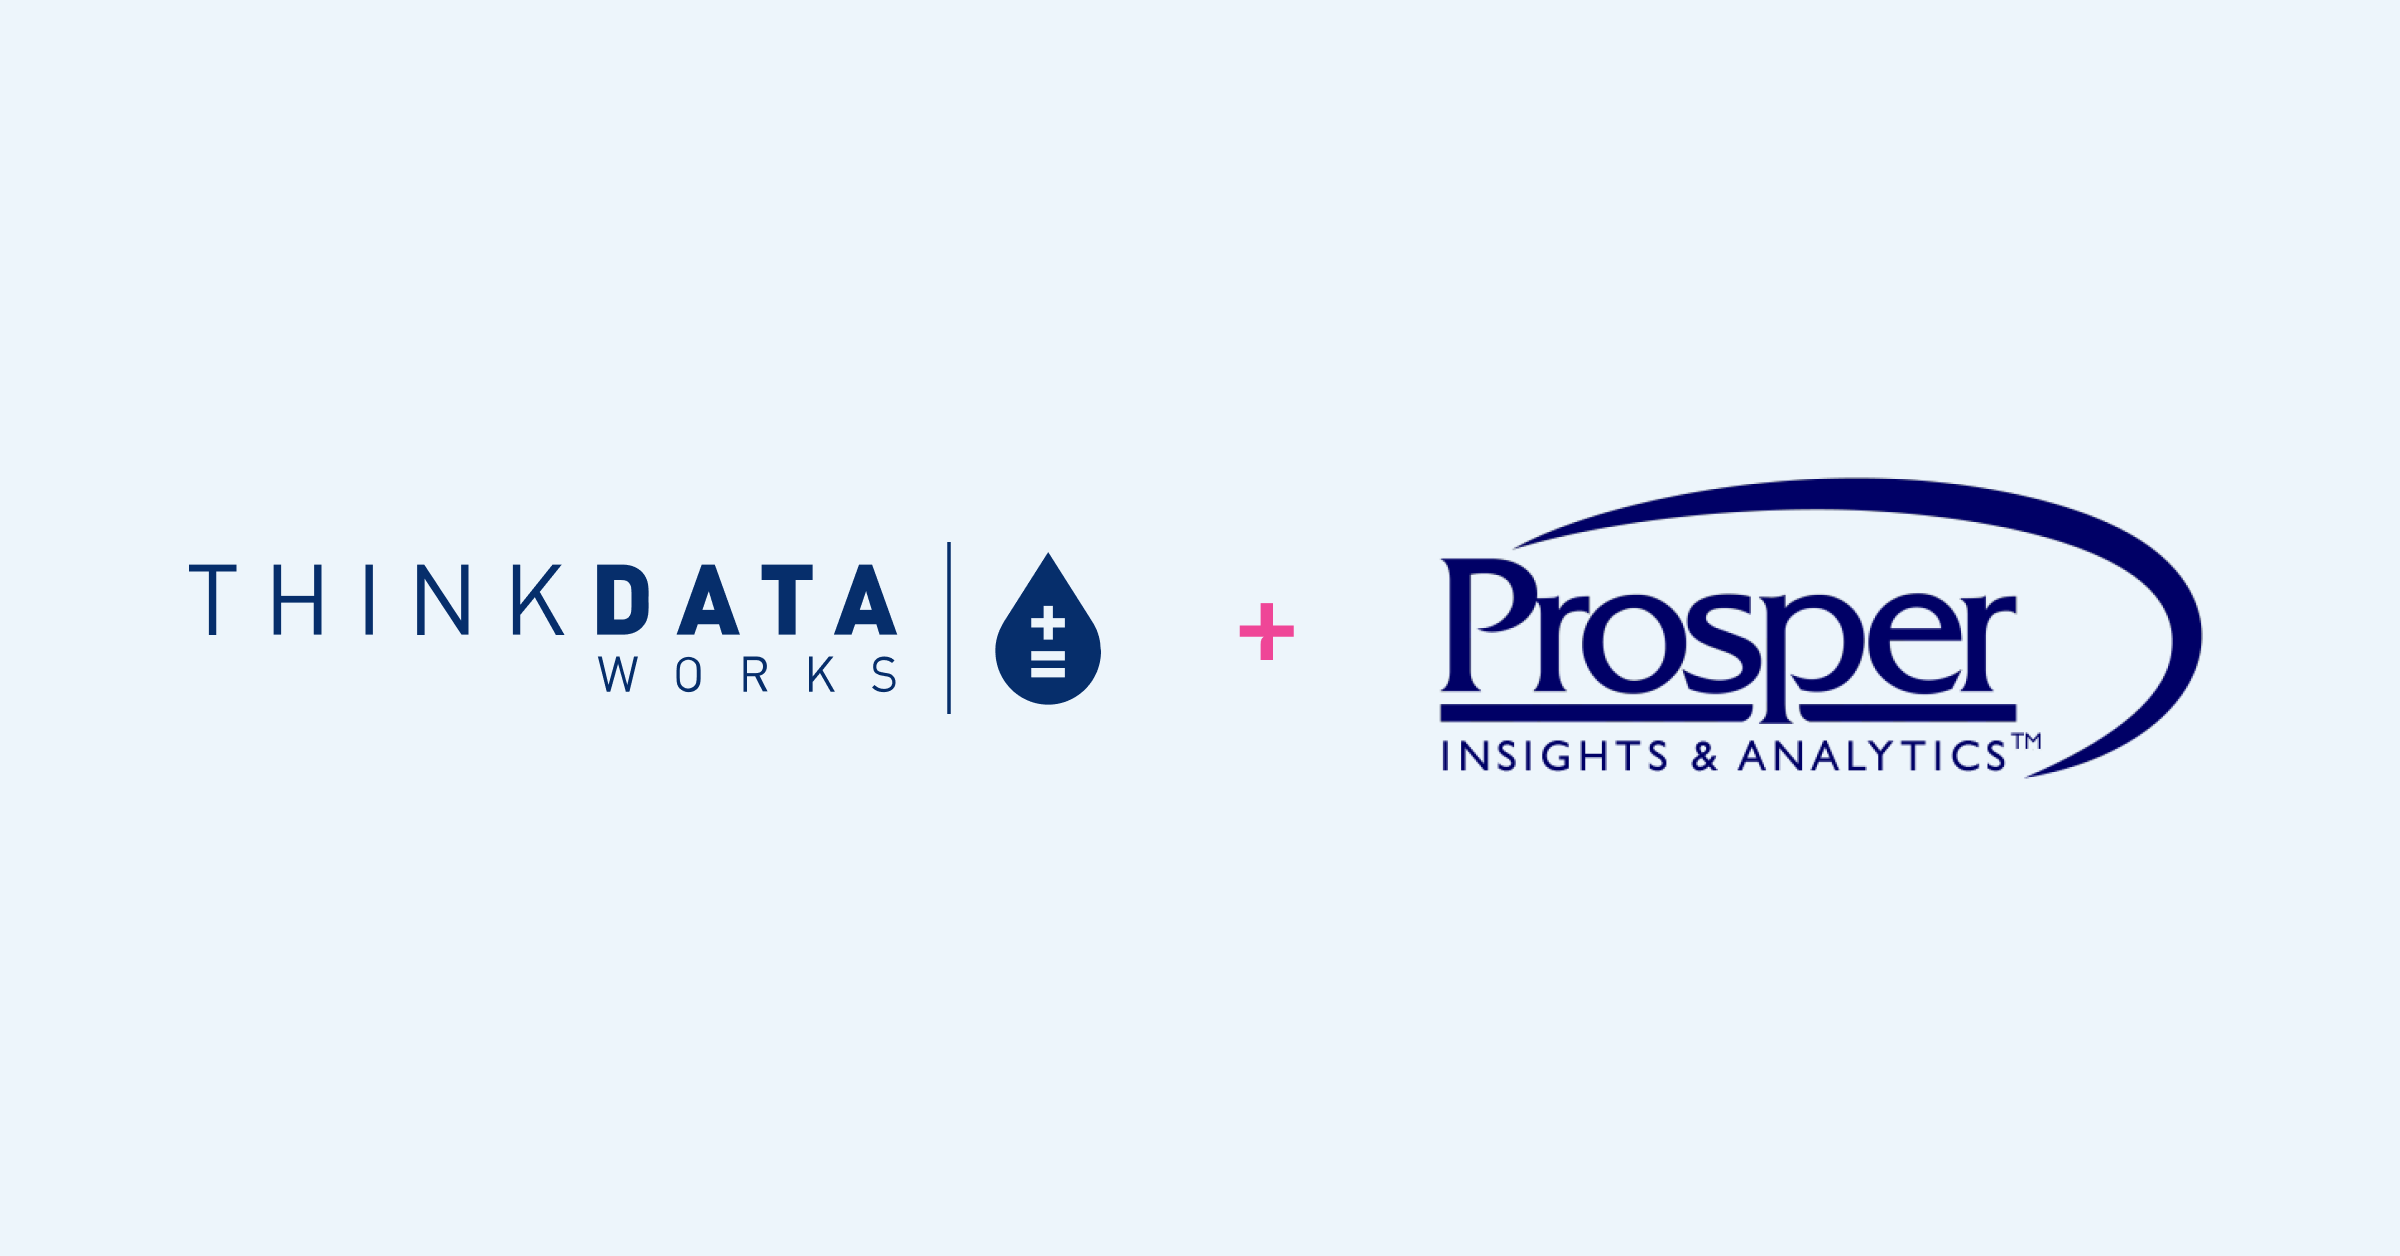 ThinkData Works partners with Prosper Insights & Analytics